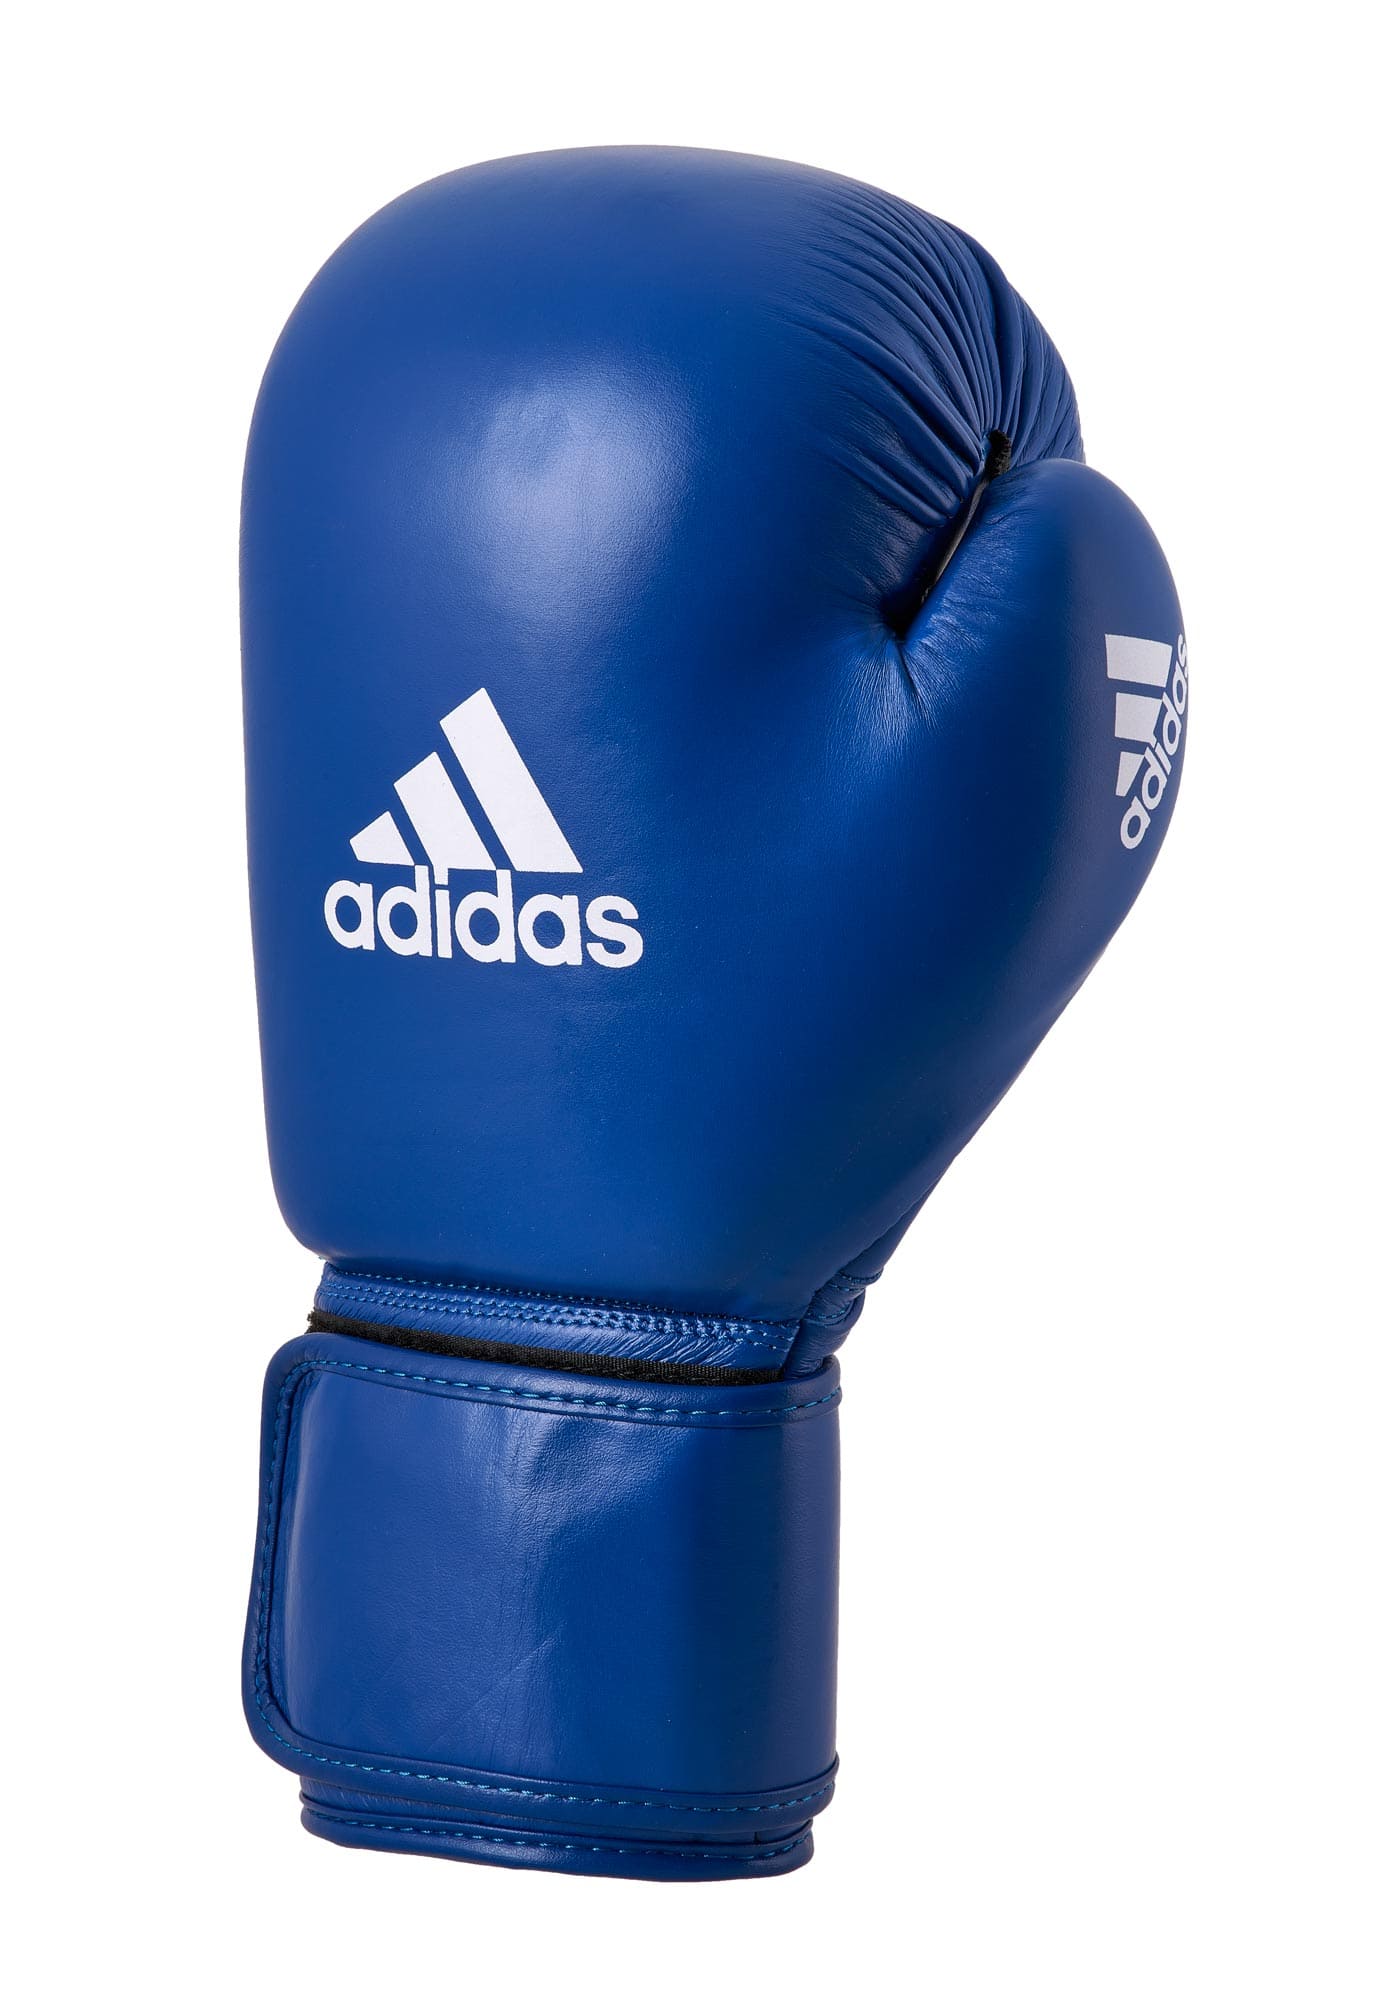 Adidas Online kaufen IBA EMPAROR Blau Boxhandschuhe Wettkampf ✓ |